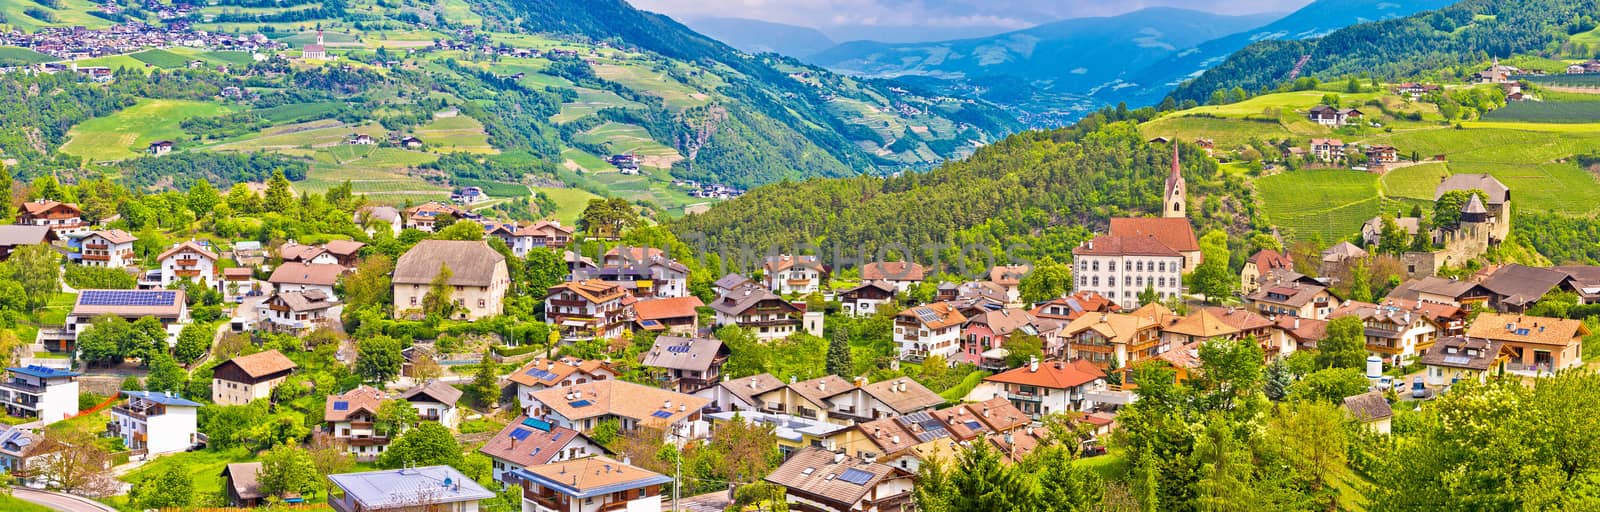 Idyllic alpine village of Gudon architecture and landscape panoramic view, Bolzano province in Trentino Alto Adige region of Italy